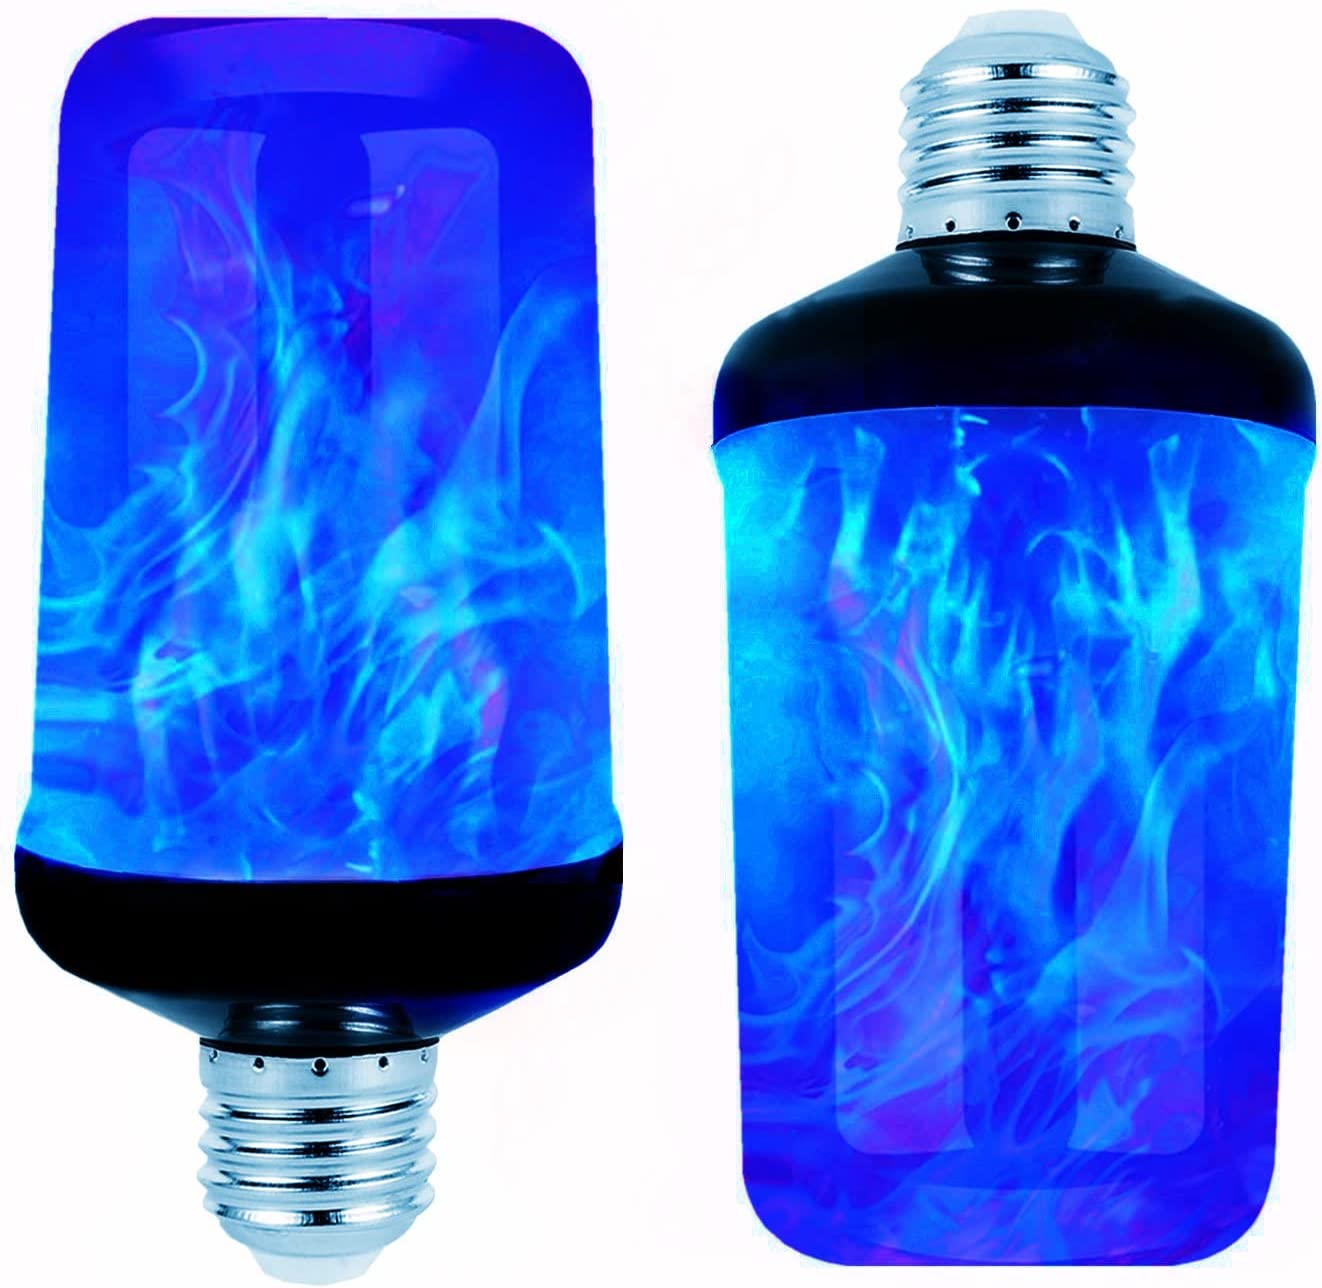 SmartTechShopping Bulbs Blue LED Flame Light Bulb,4 Modes Fire Light Bulbs with Gravity Sensor as decorations